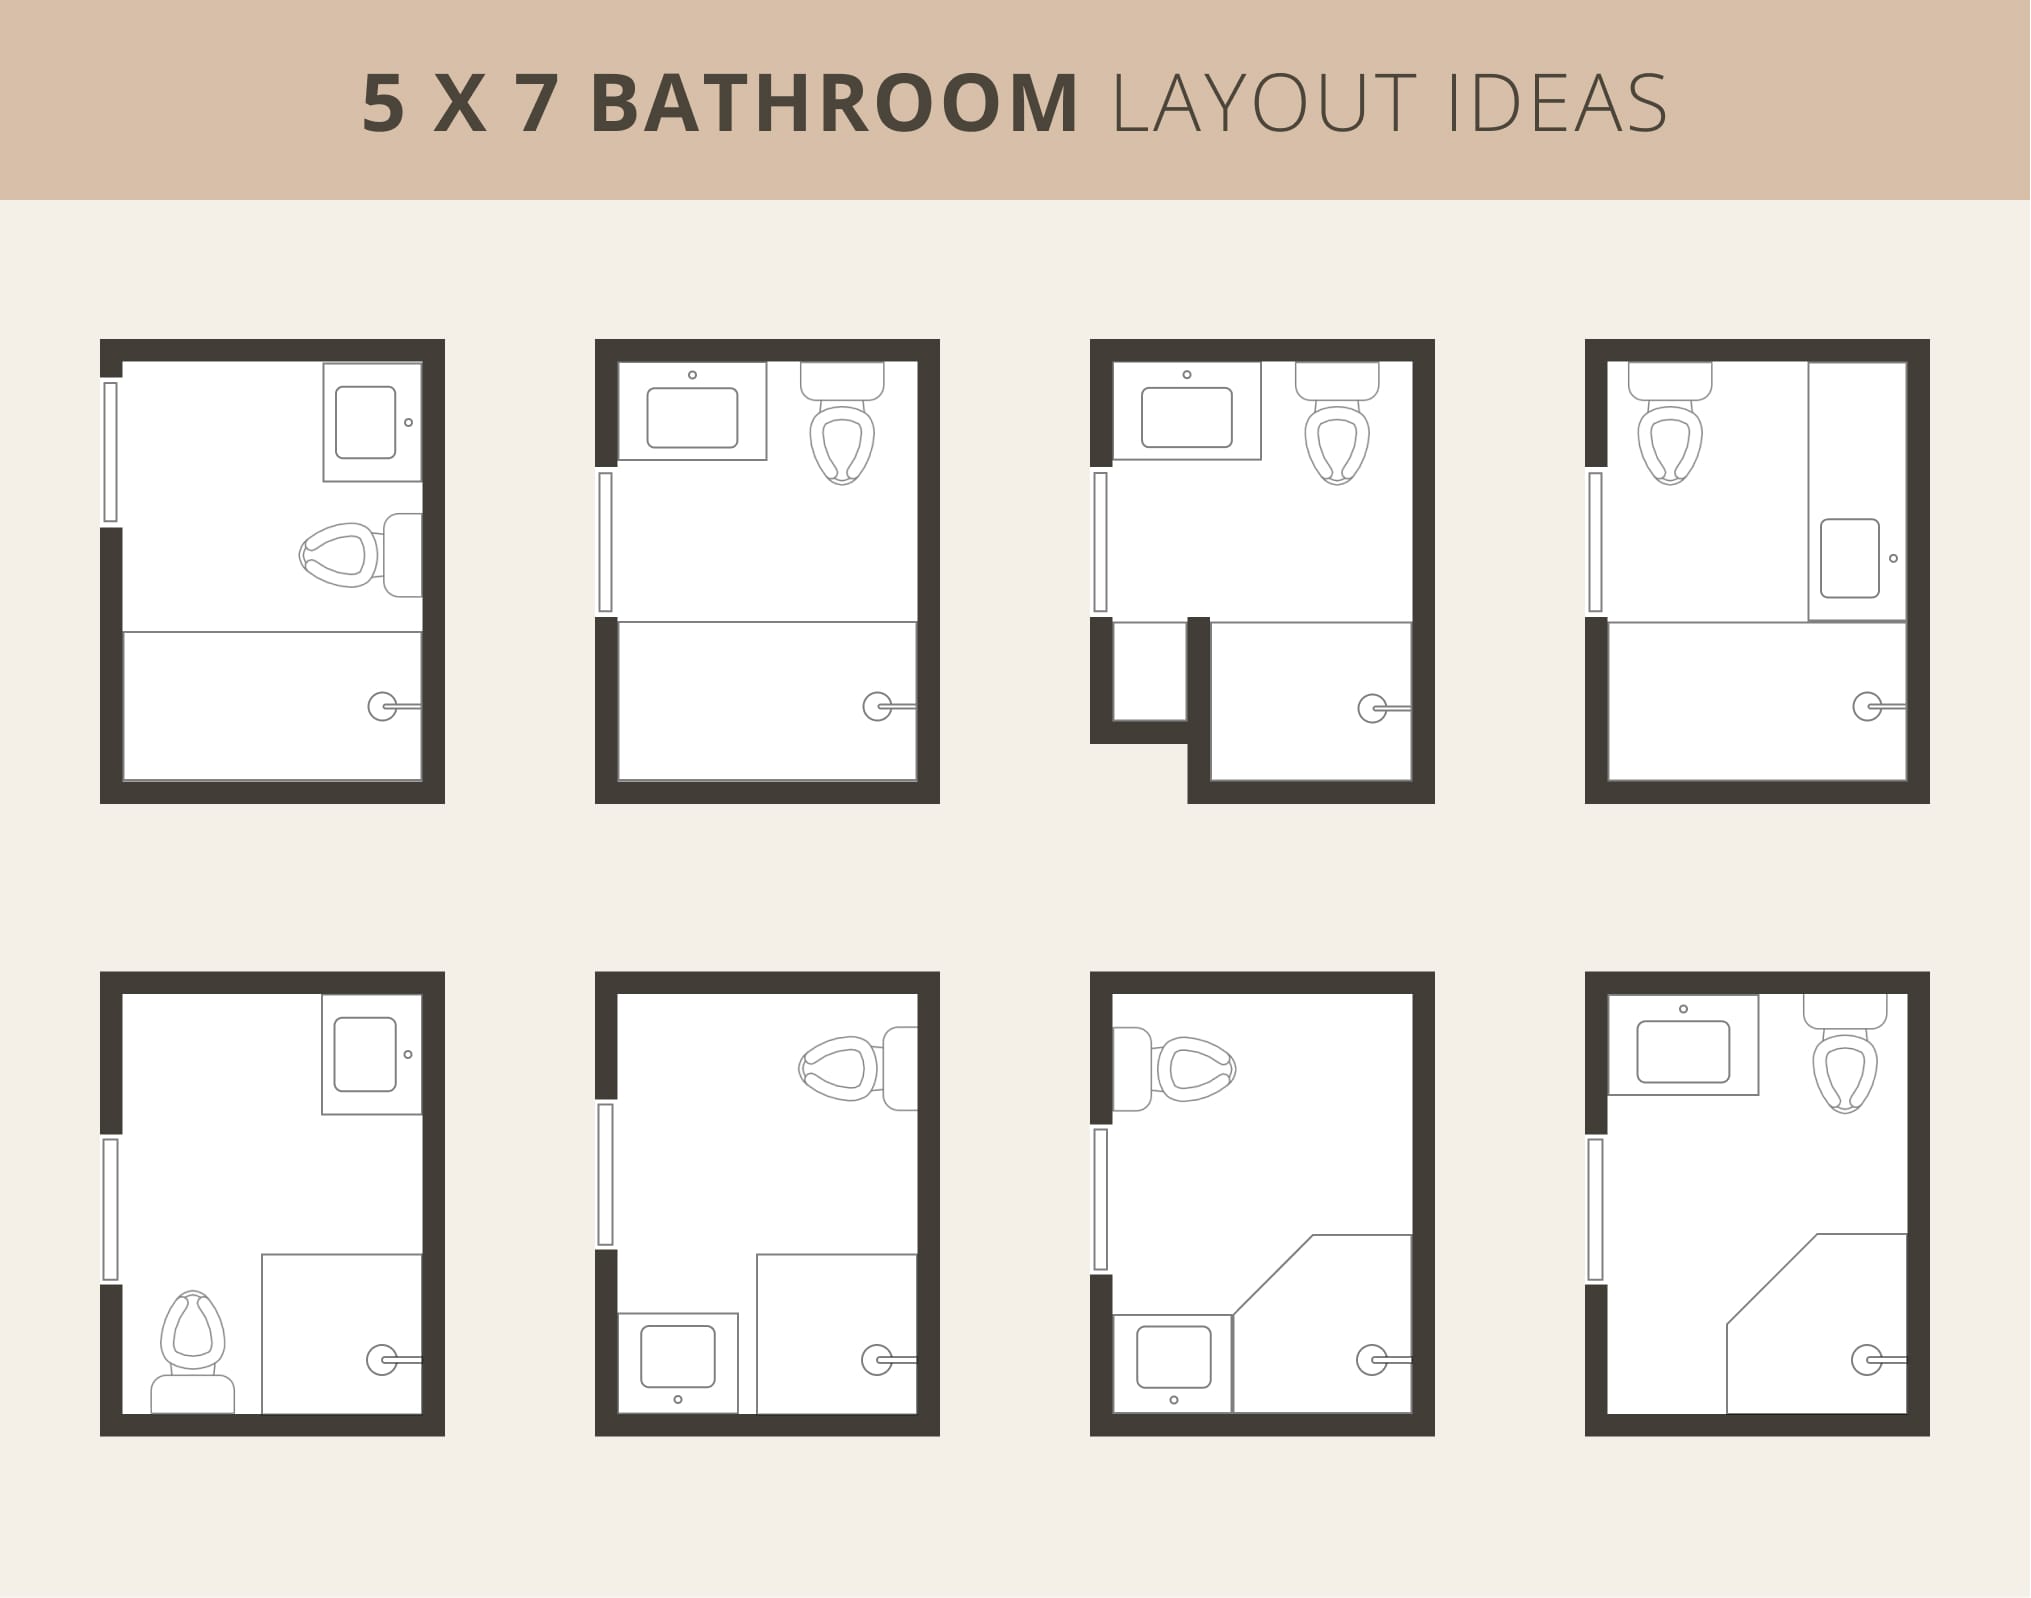 5x7 small full bathrooms layout ideas
